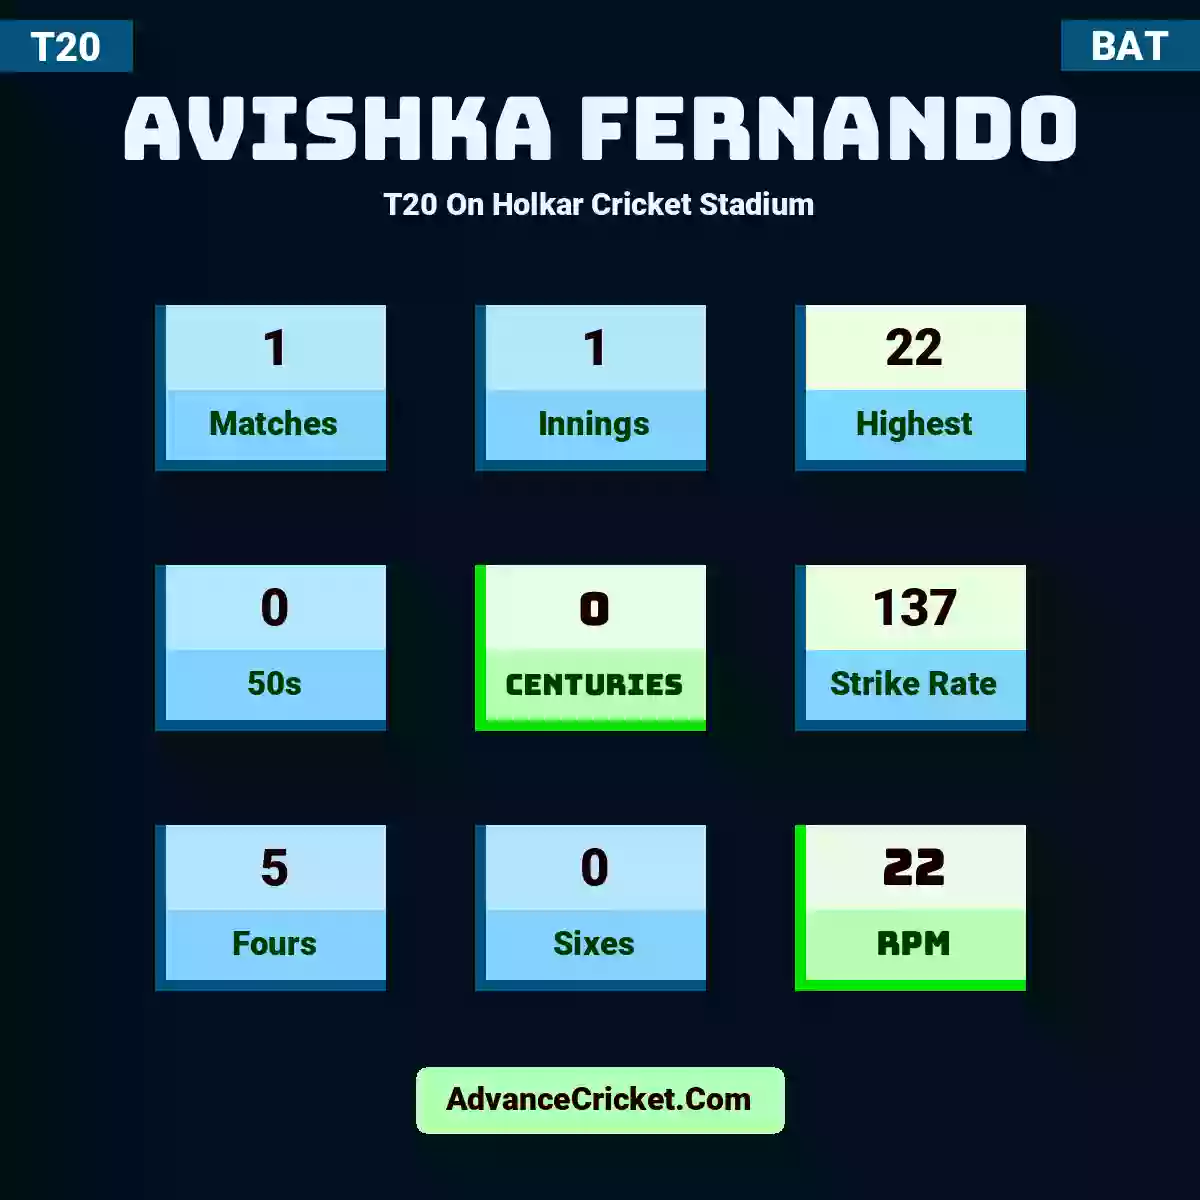 Avishka Fernando T20  On Holkar Cricket Stadium, Avishka Fernando played 1 matches, scored 22 runs as highest, 0 half-centuries, and 0 centuries, with a strike rate of 137. A.Fernando hit 5 fours and 0 sixes, with an RPM of 22.